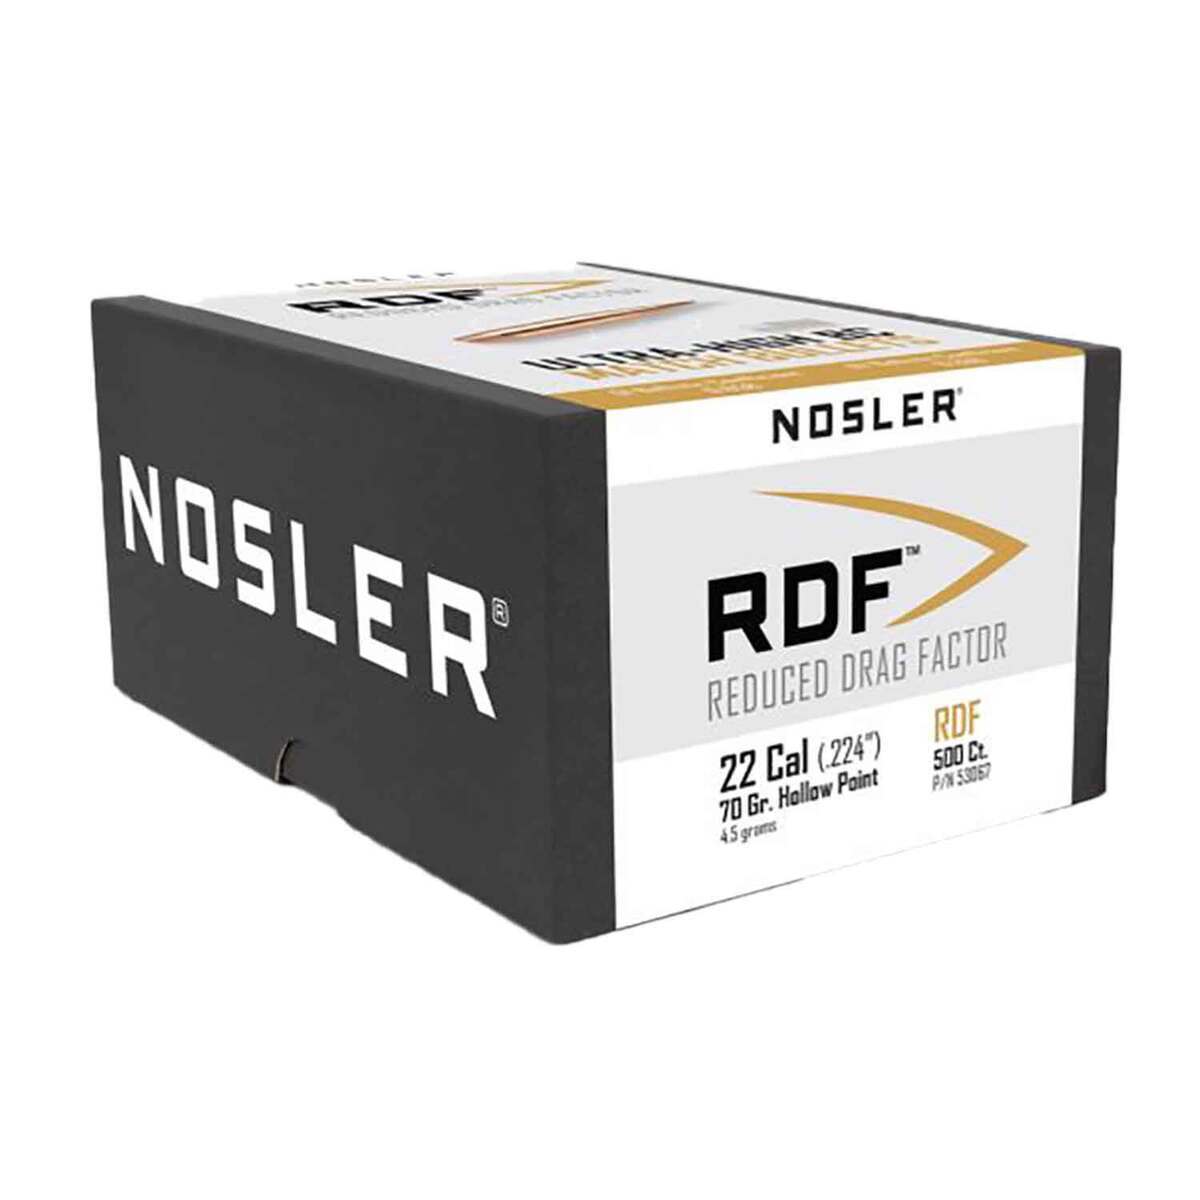 Nosler RDF 22 Caliber 70gr Hollow Point Reloading Bullets - 500 Rounds ...